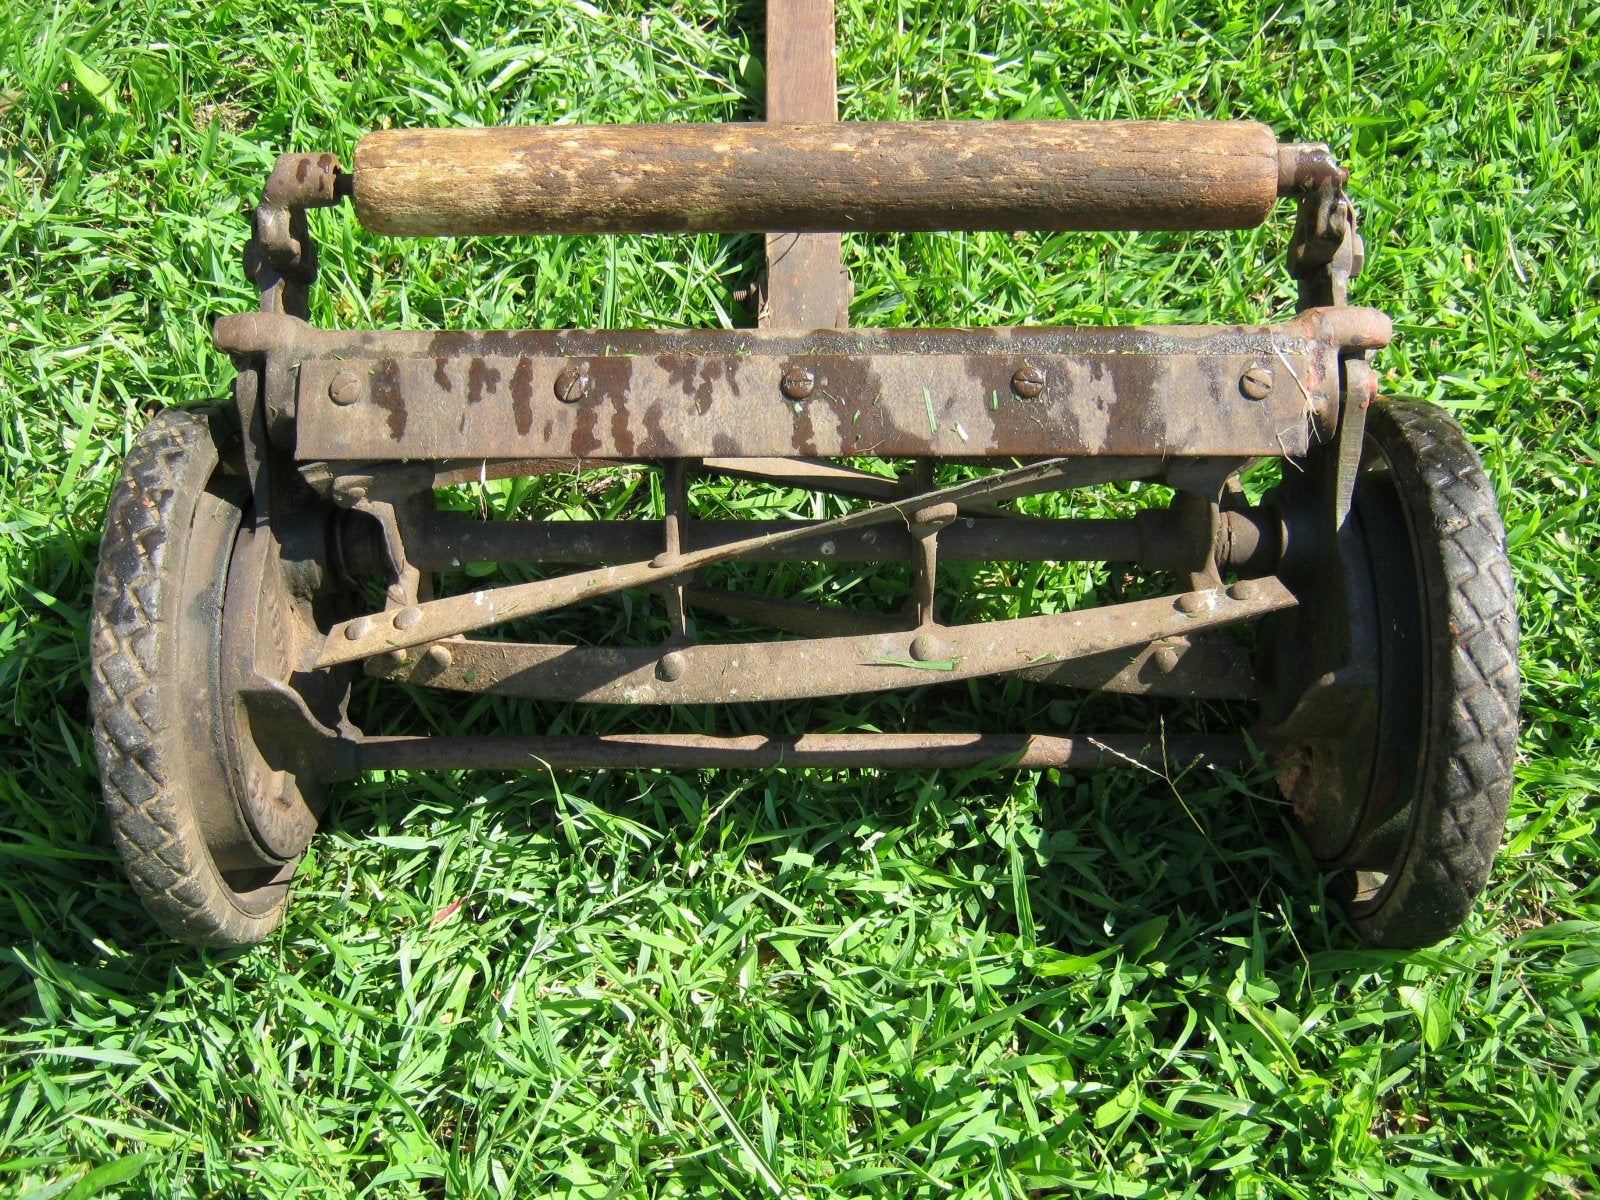 Sears Companion Reel ball bearing lawn mower made around 1933-1941 time  period